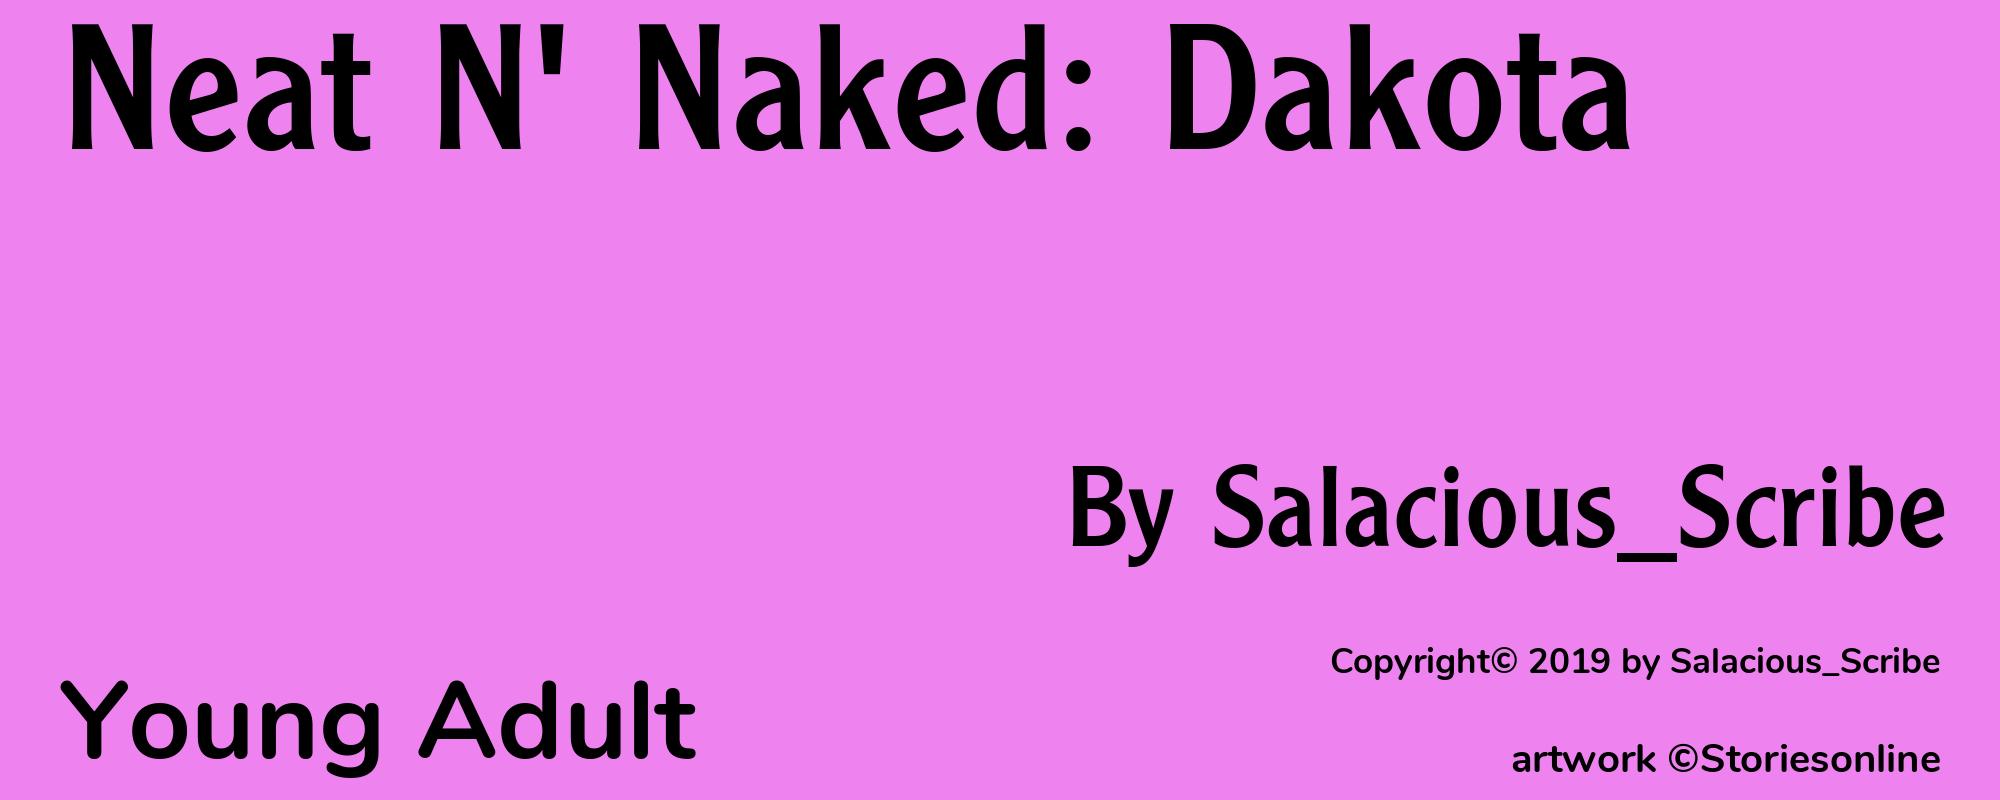 Neat N' Naked: Dakota - Cover